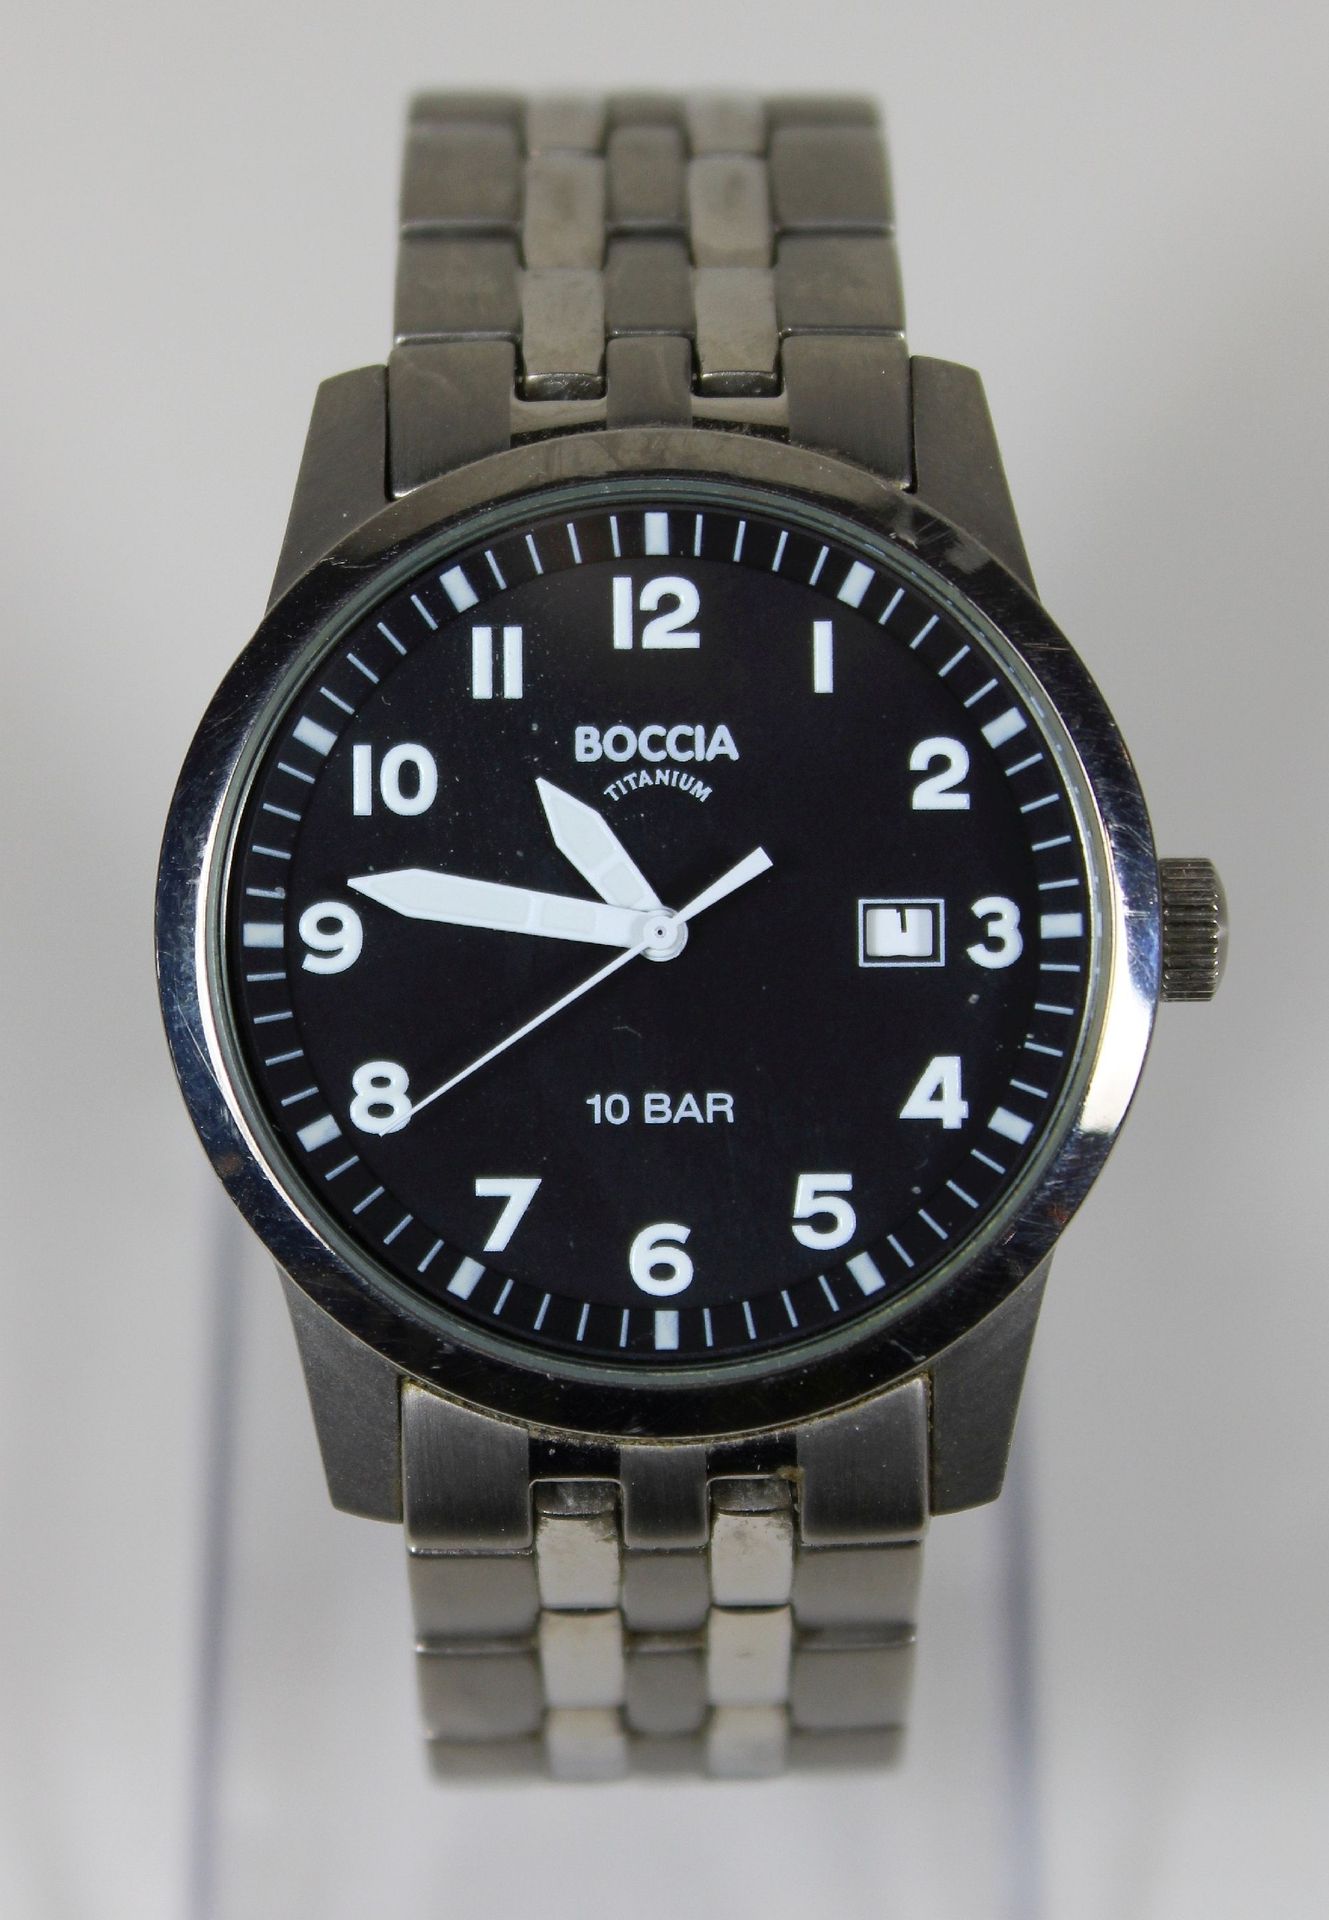 Herrenarmbanduhr, Marke Boccia 男士腕表，品牌Boccia，钛合金，防水，圆形表盘，电池供电，未经测试，磨损痕迹很小。